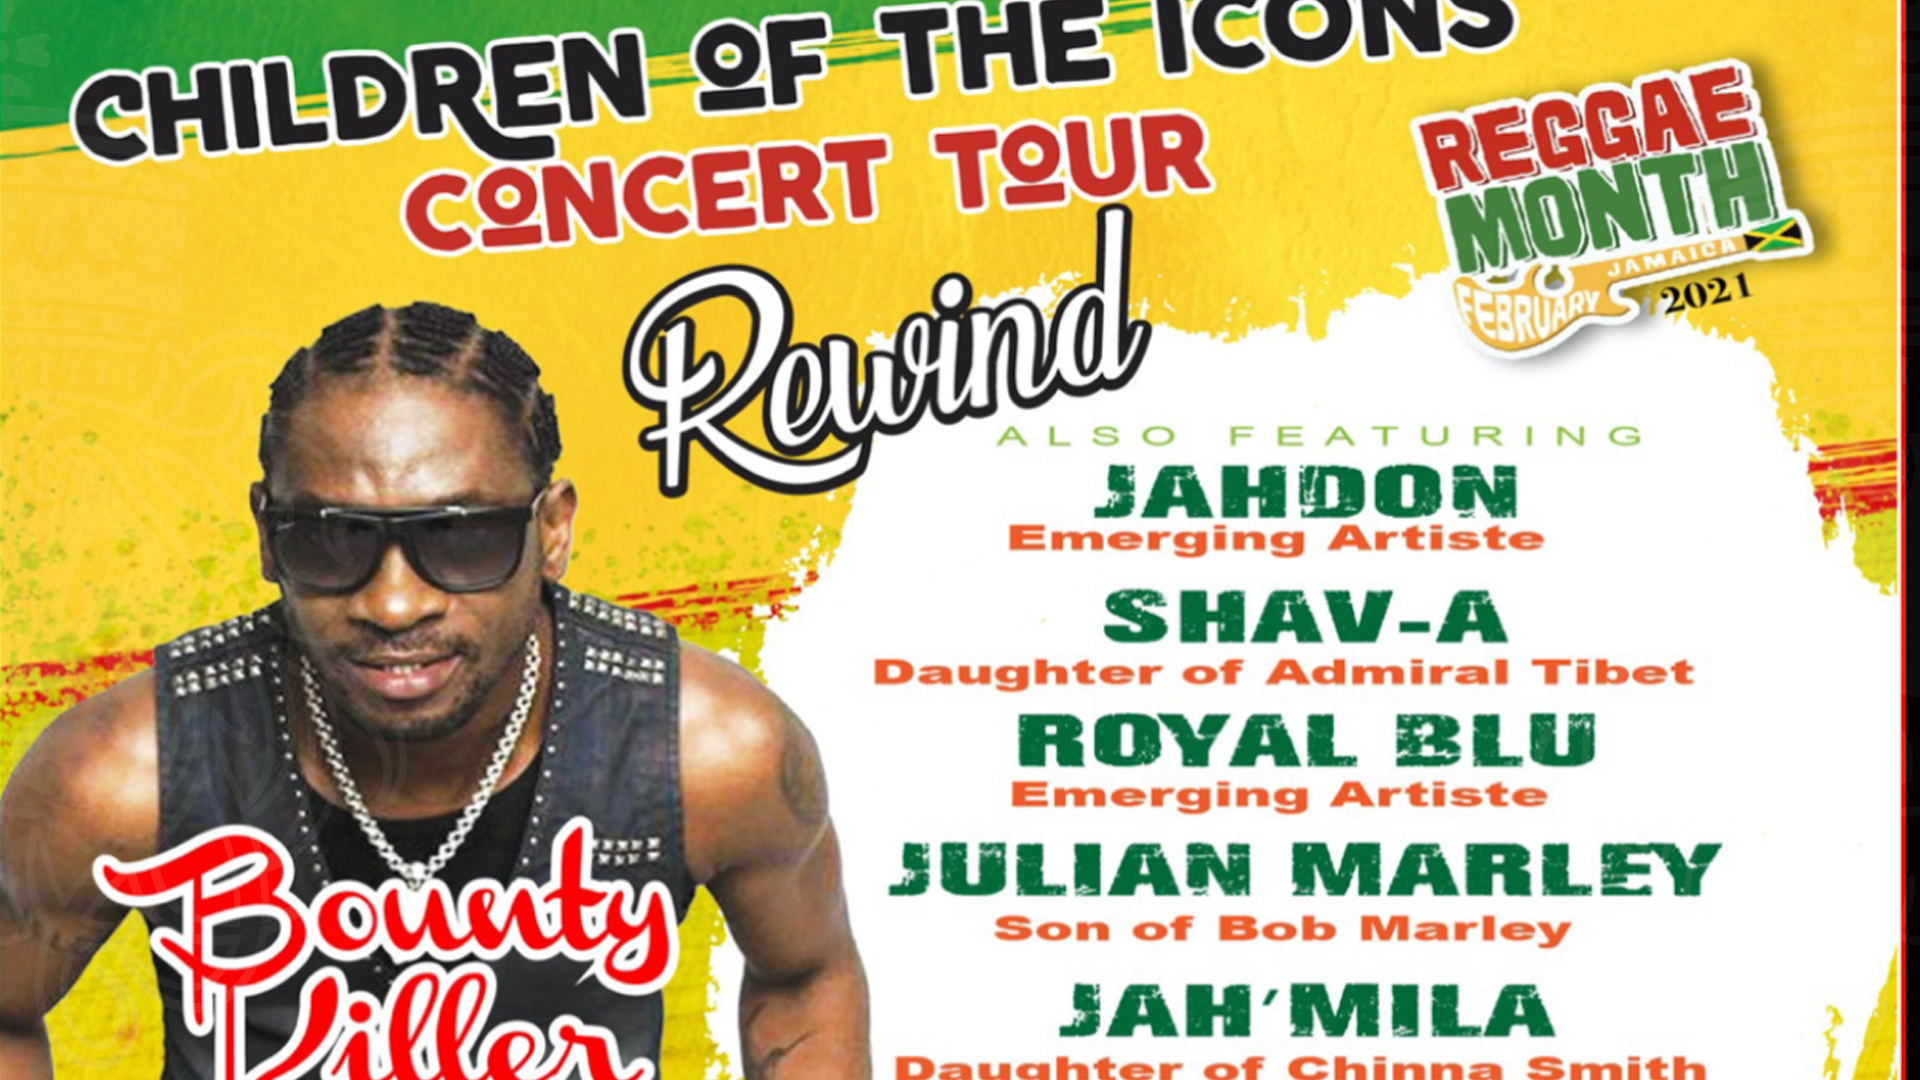 Reggae Month Jamaica, February 9 - Children of the Icons Rewind & Reggae Month University 2